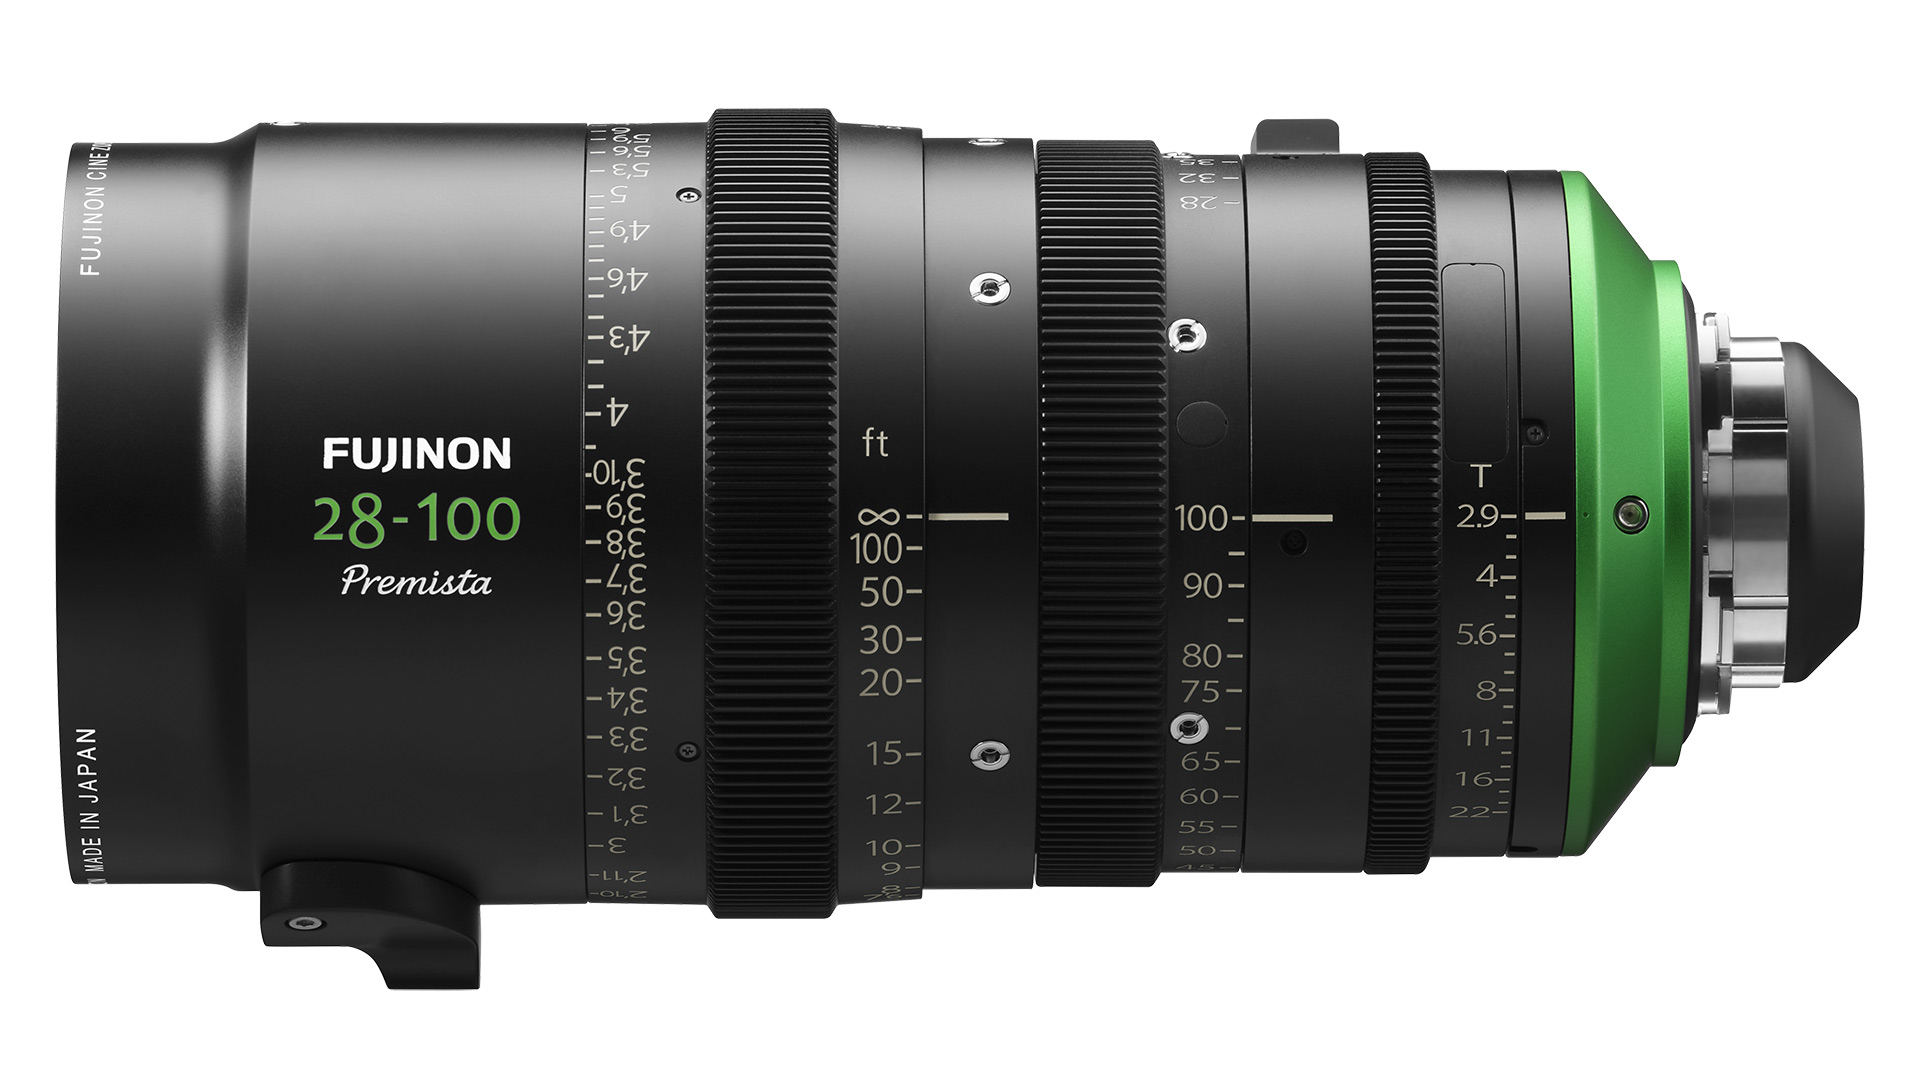 Fujinon Premista28-100mmT2.9 lens side view